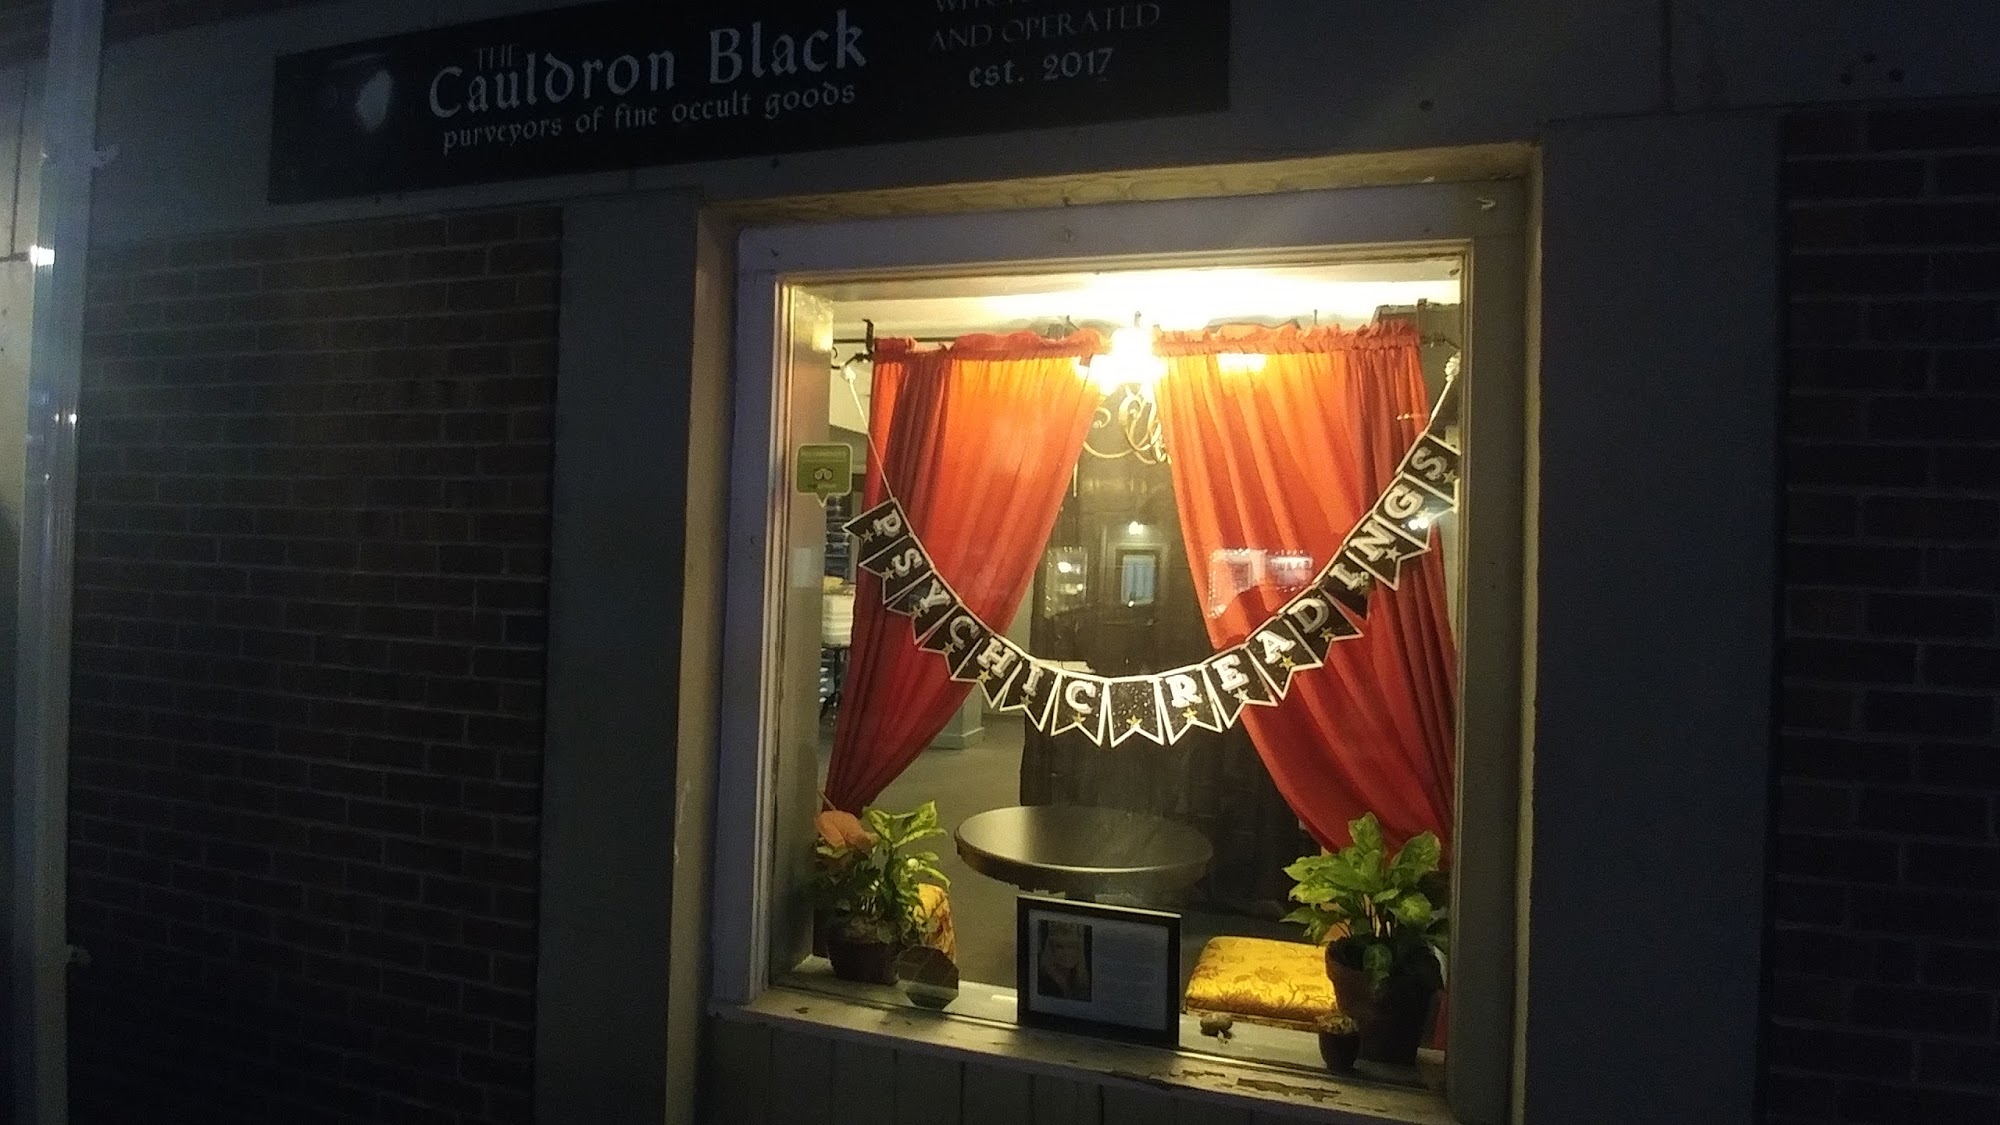 The Cauldron Black